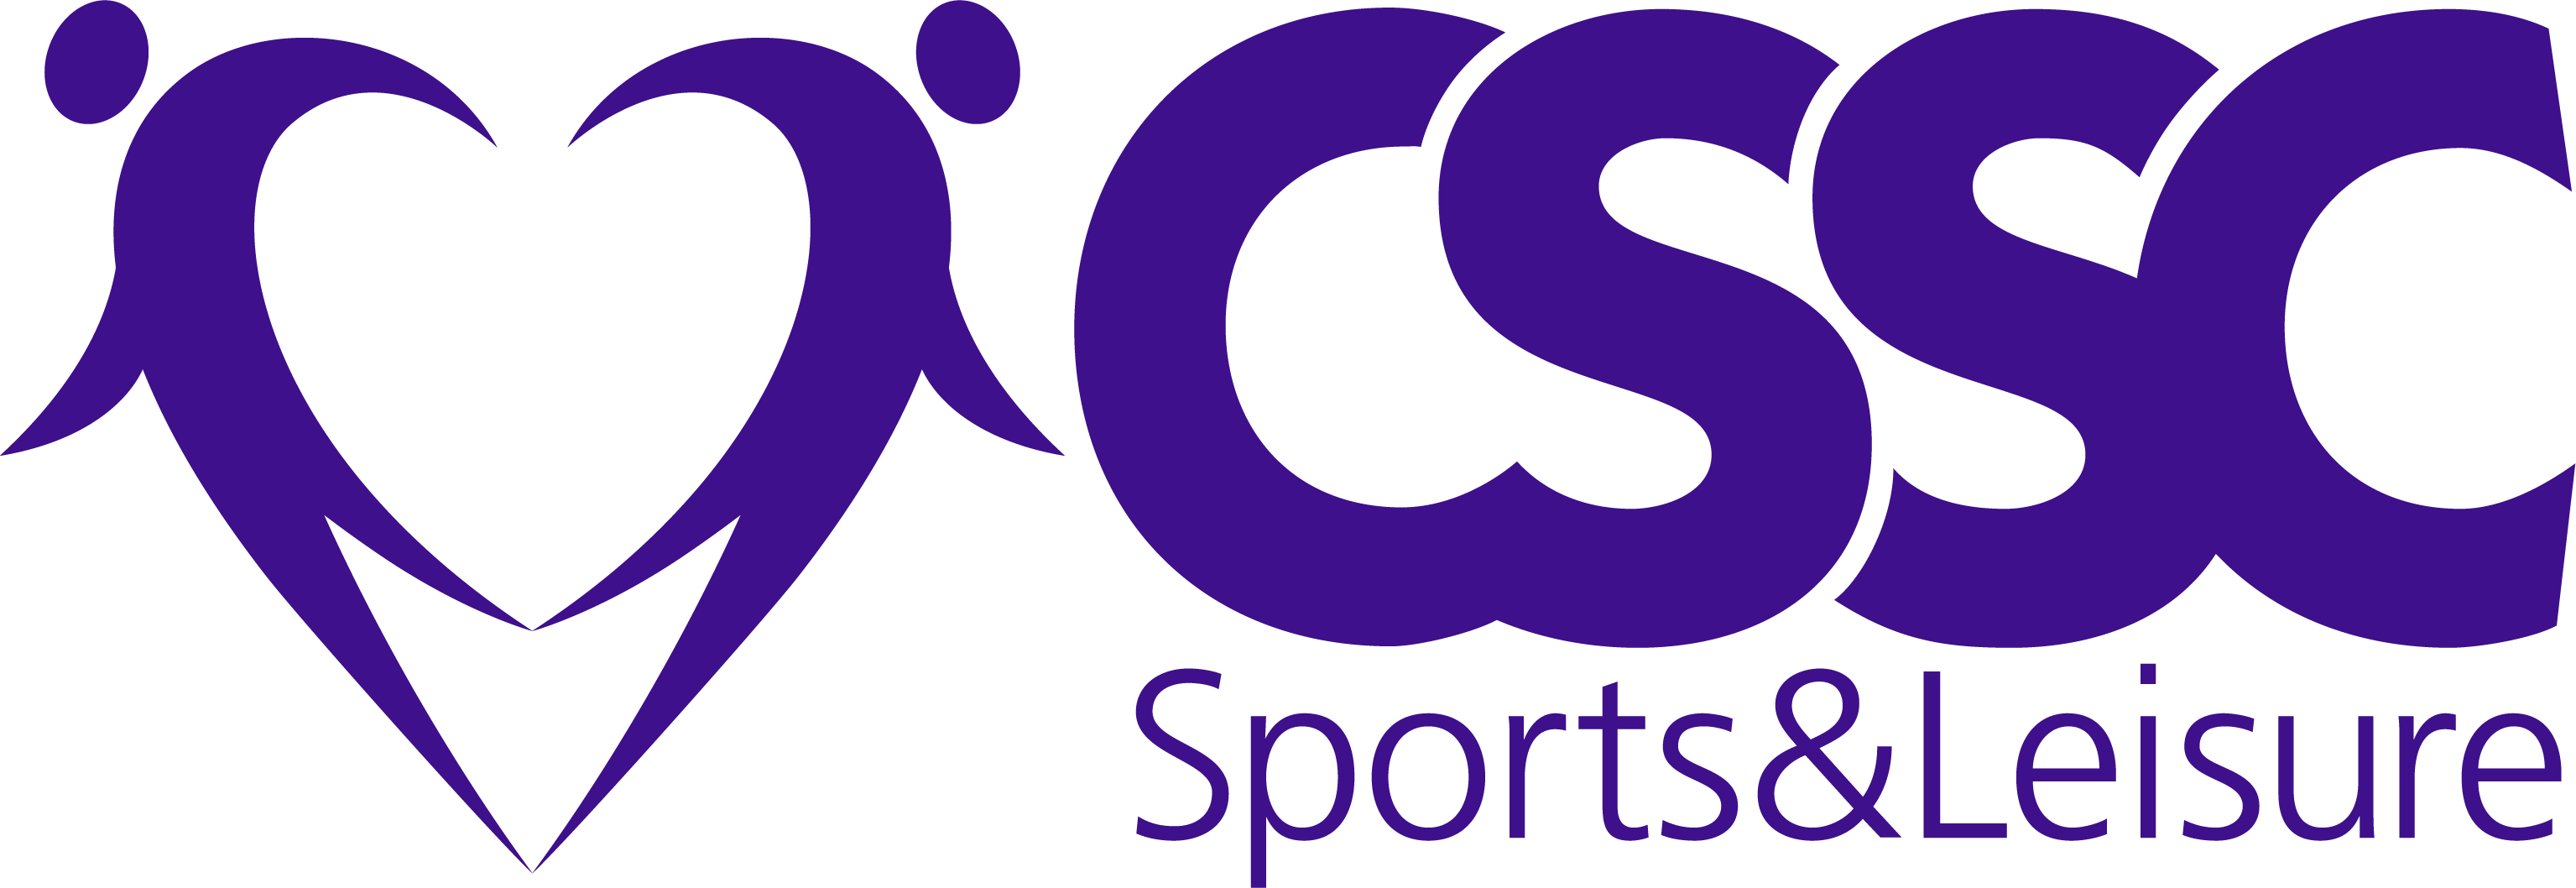 CSSC Sports & Leisure